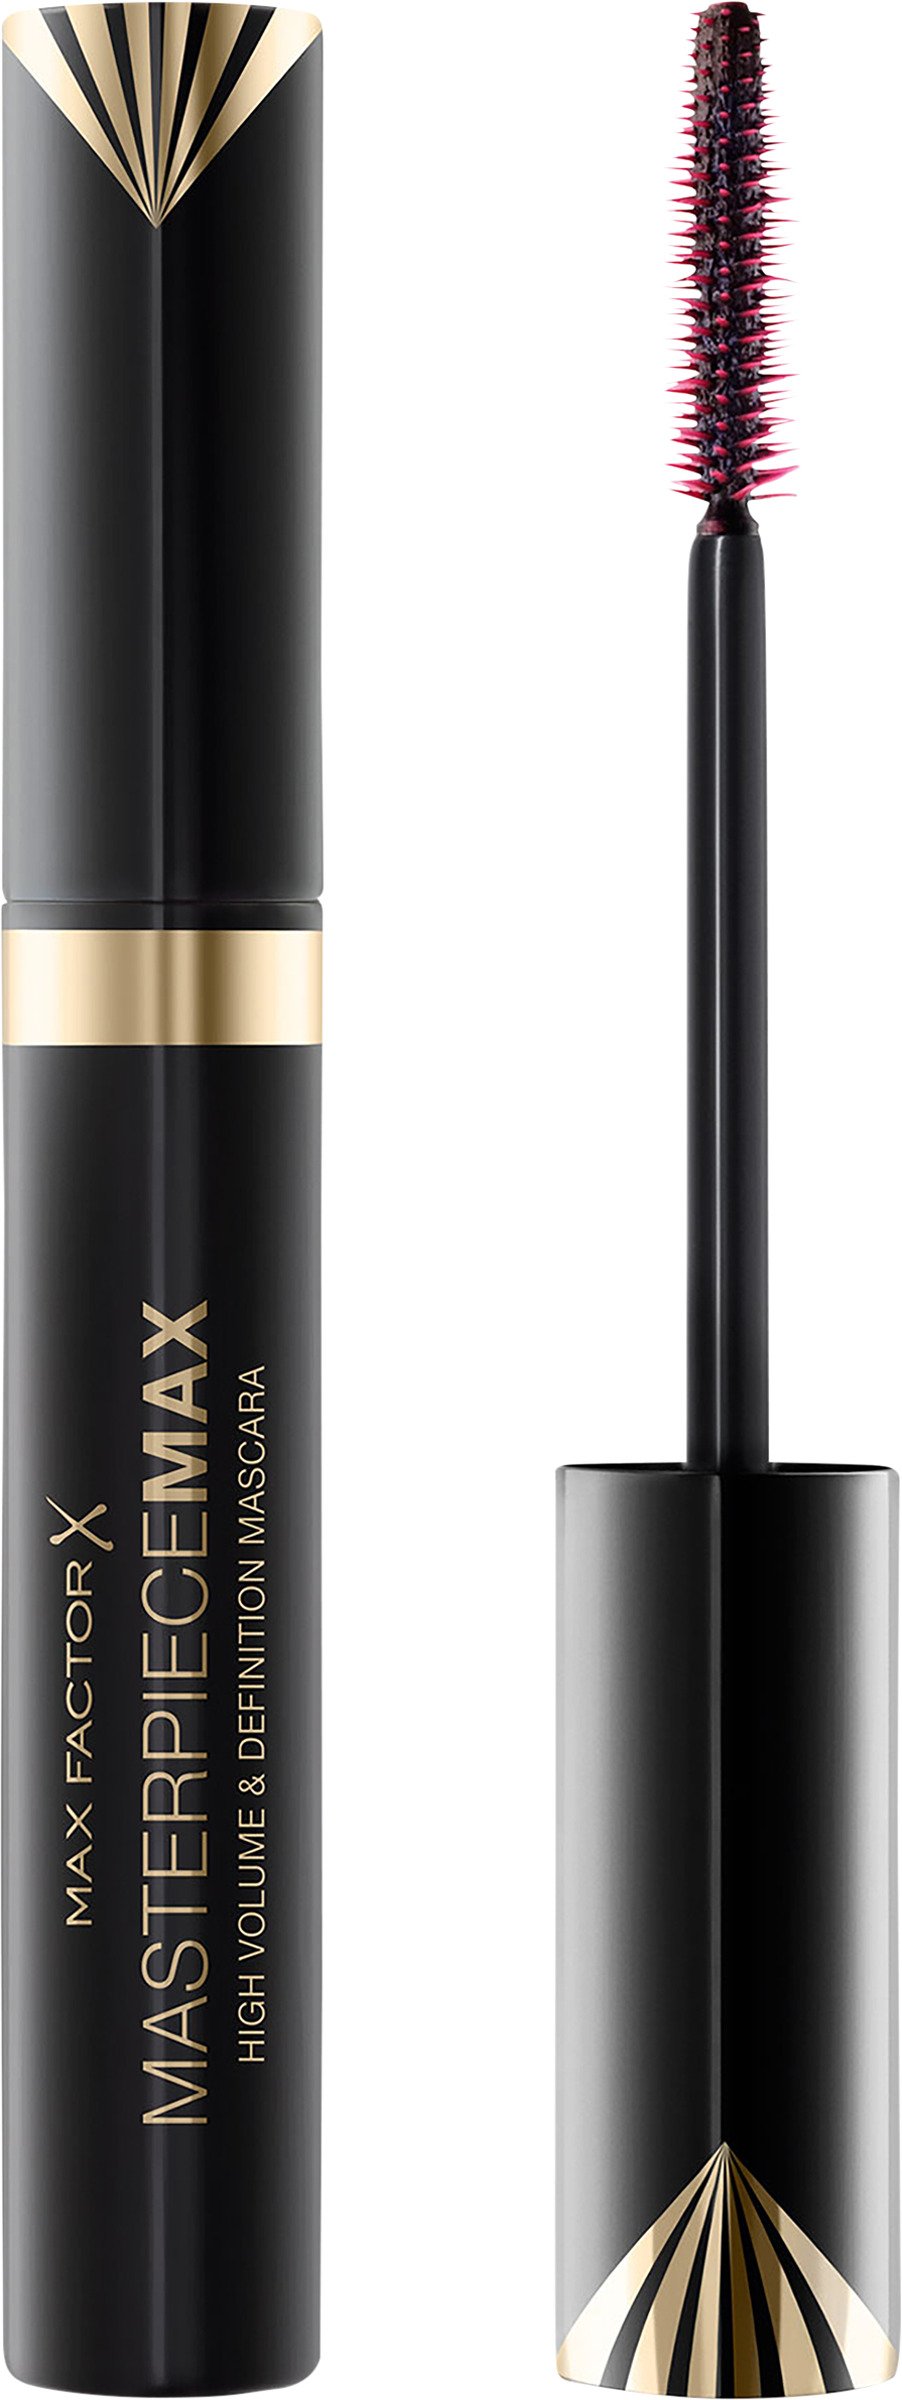 Max Factor Masterpiece Max Mascara 002 Black/Brown 7 ml